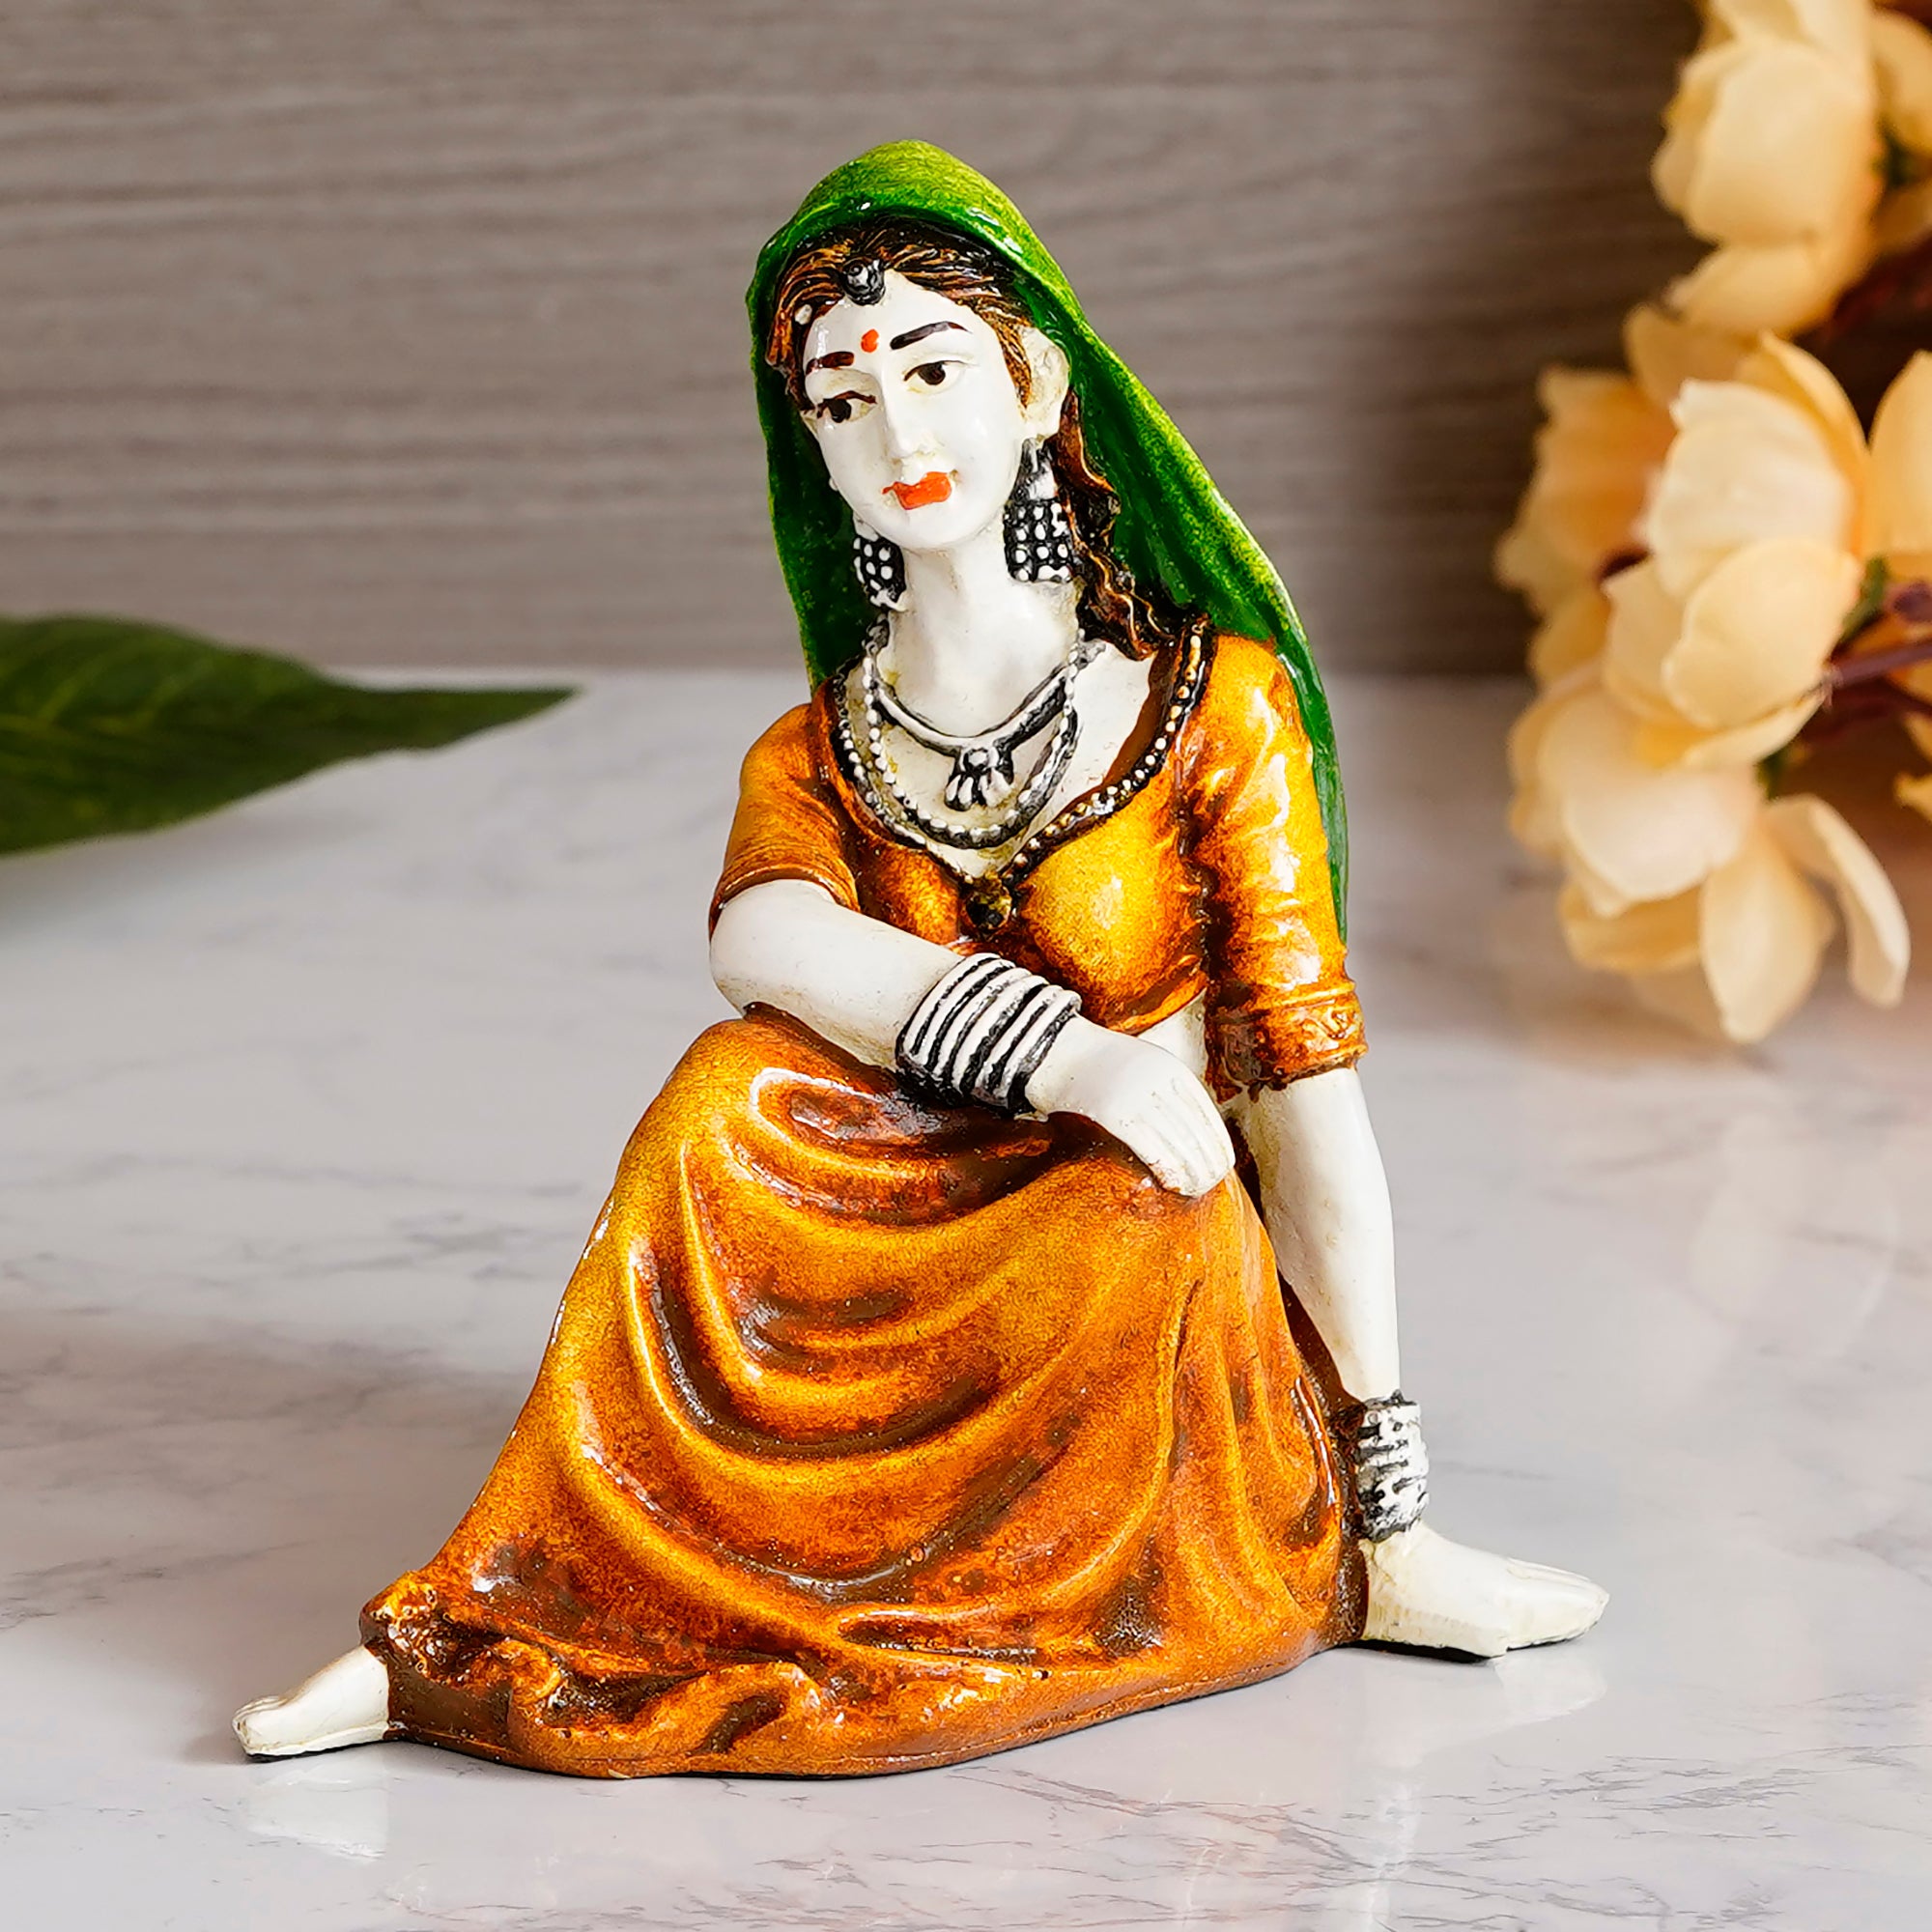 Polyresin Resting Rajasthani Women Statue Handcrafted Human Figurine Decorative Showpiece